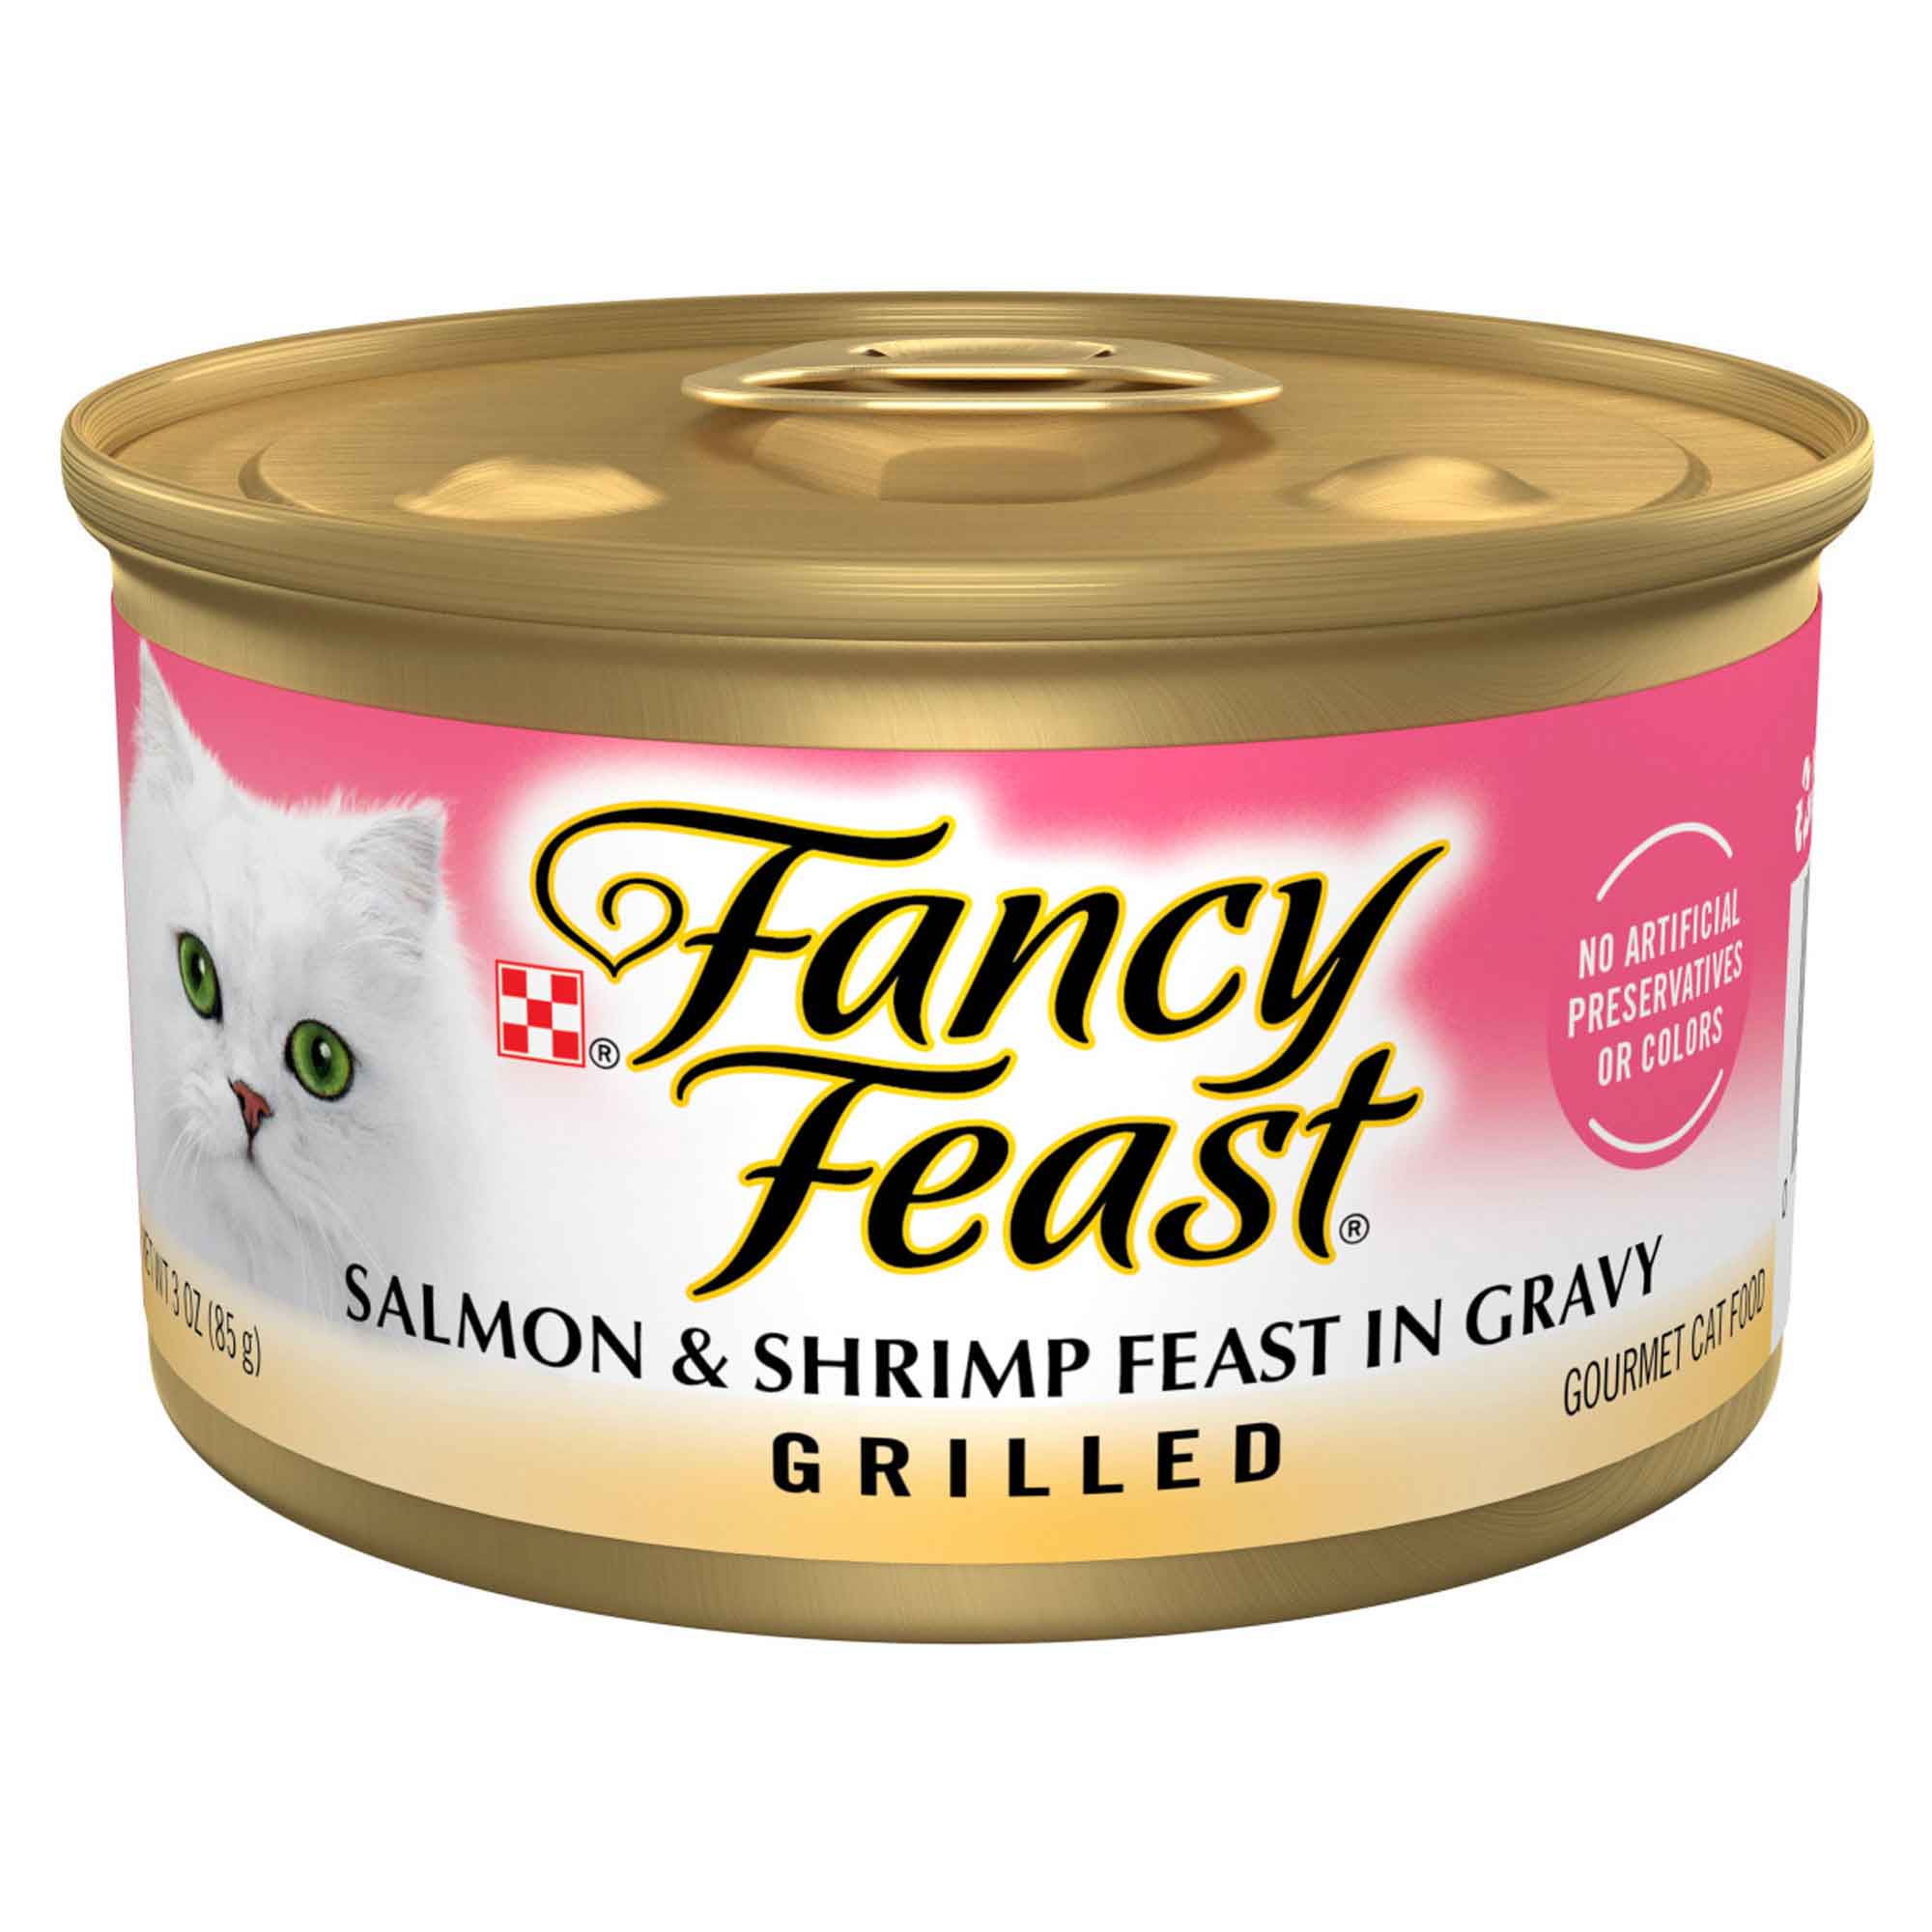 Fancy Feast Cat Food Grill Salmon Shrimp Feast 3oz